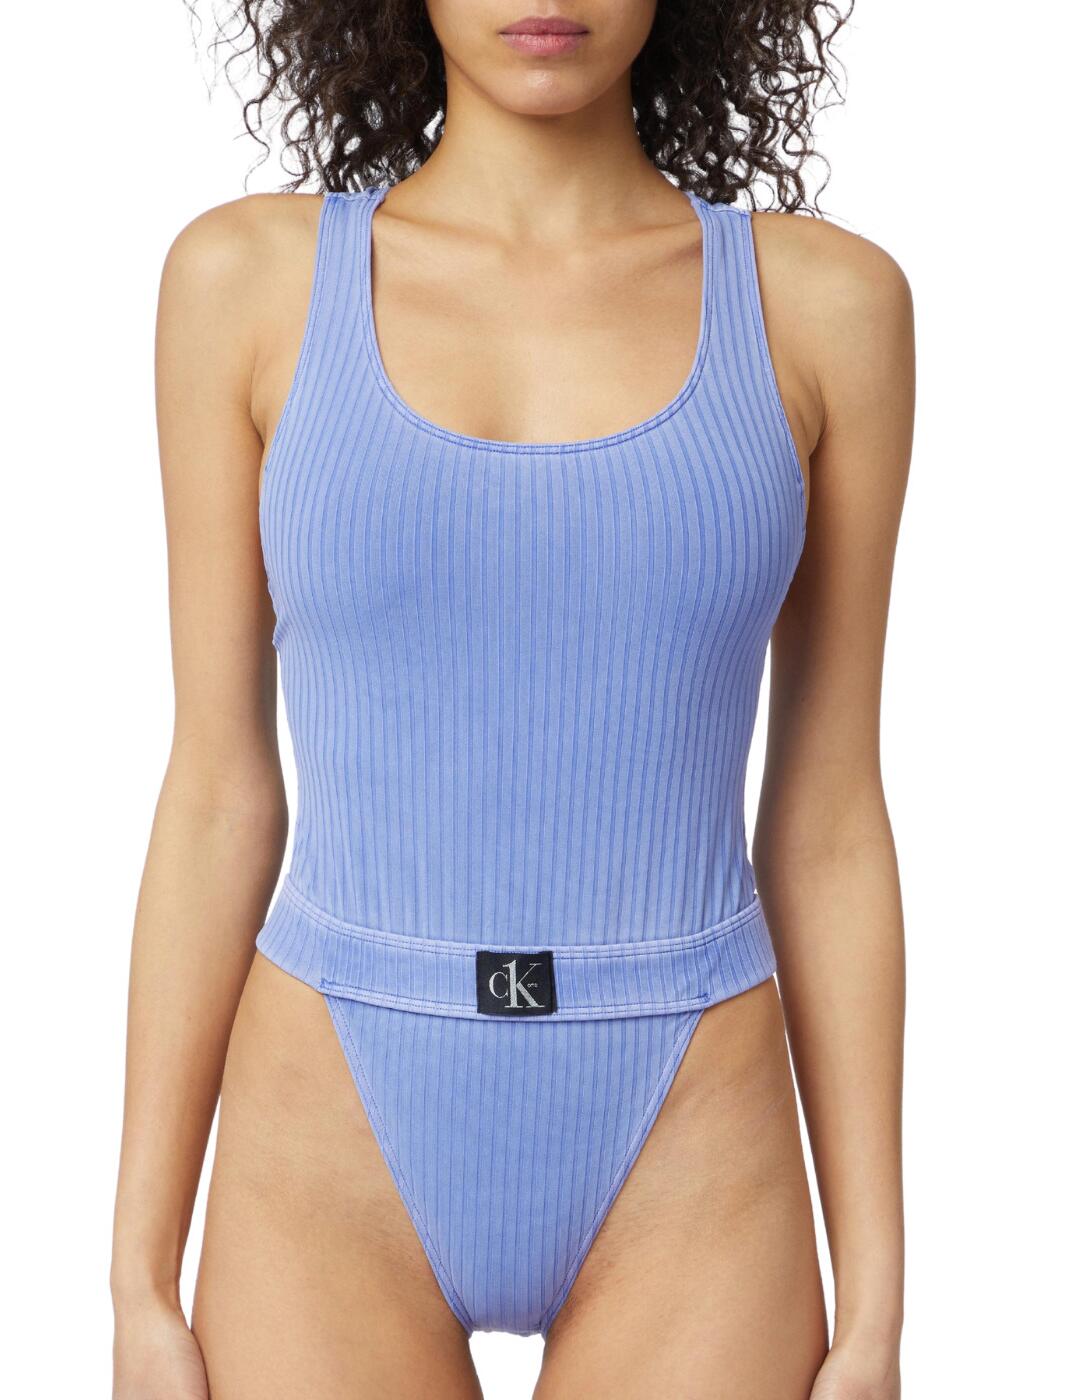 Calvin Klein CK One Authentic One Piece Swimsuit Wild Bluebell